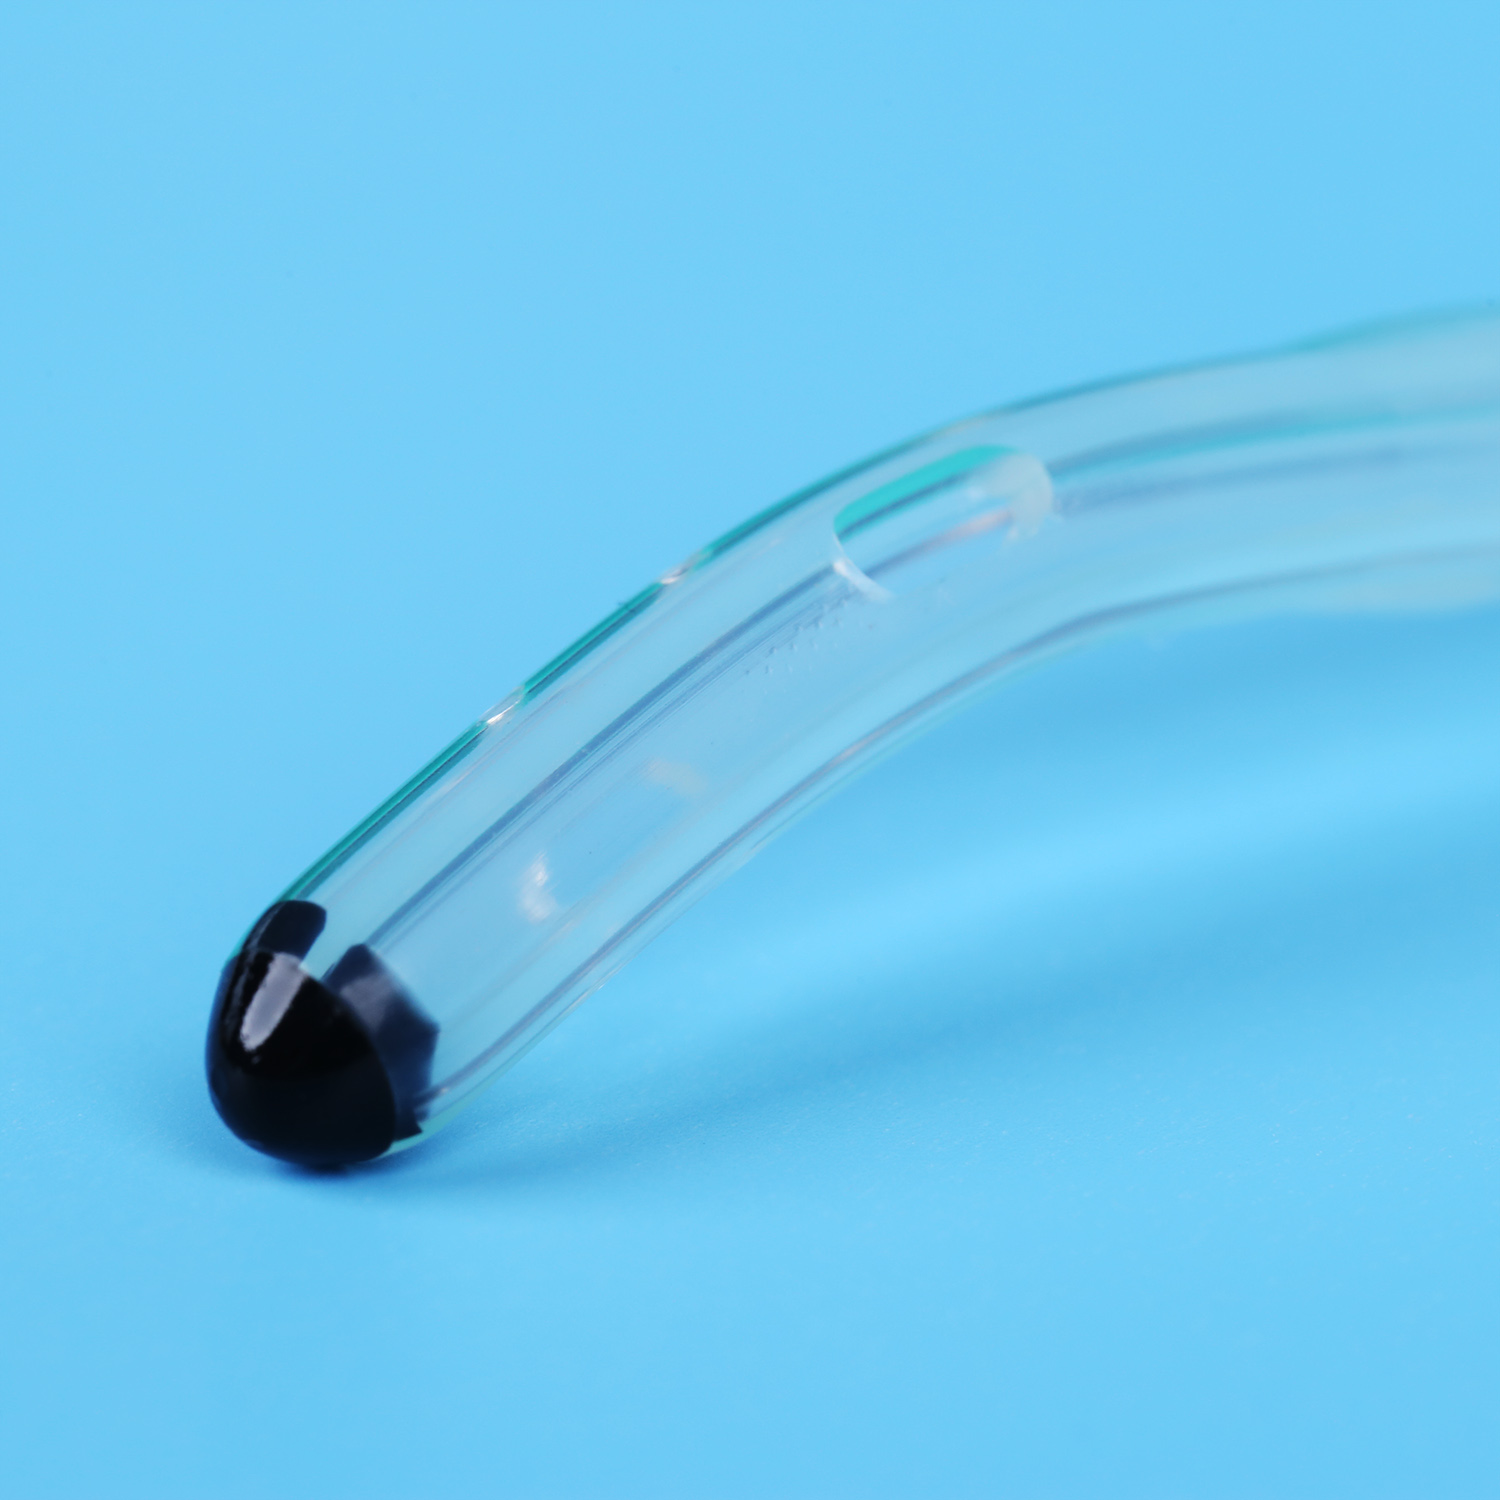 Silicone Foley Catheter 3 Way Coude Tip Tiemann ပုံမှန် Balloon China ထုတ်လုပ်သူ